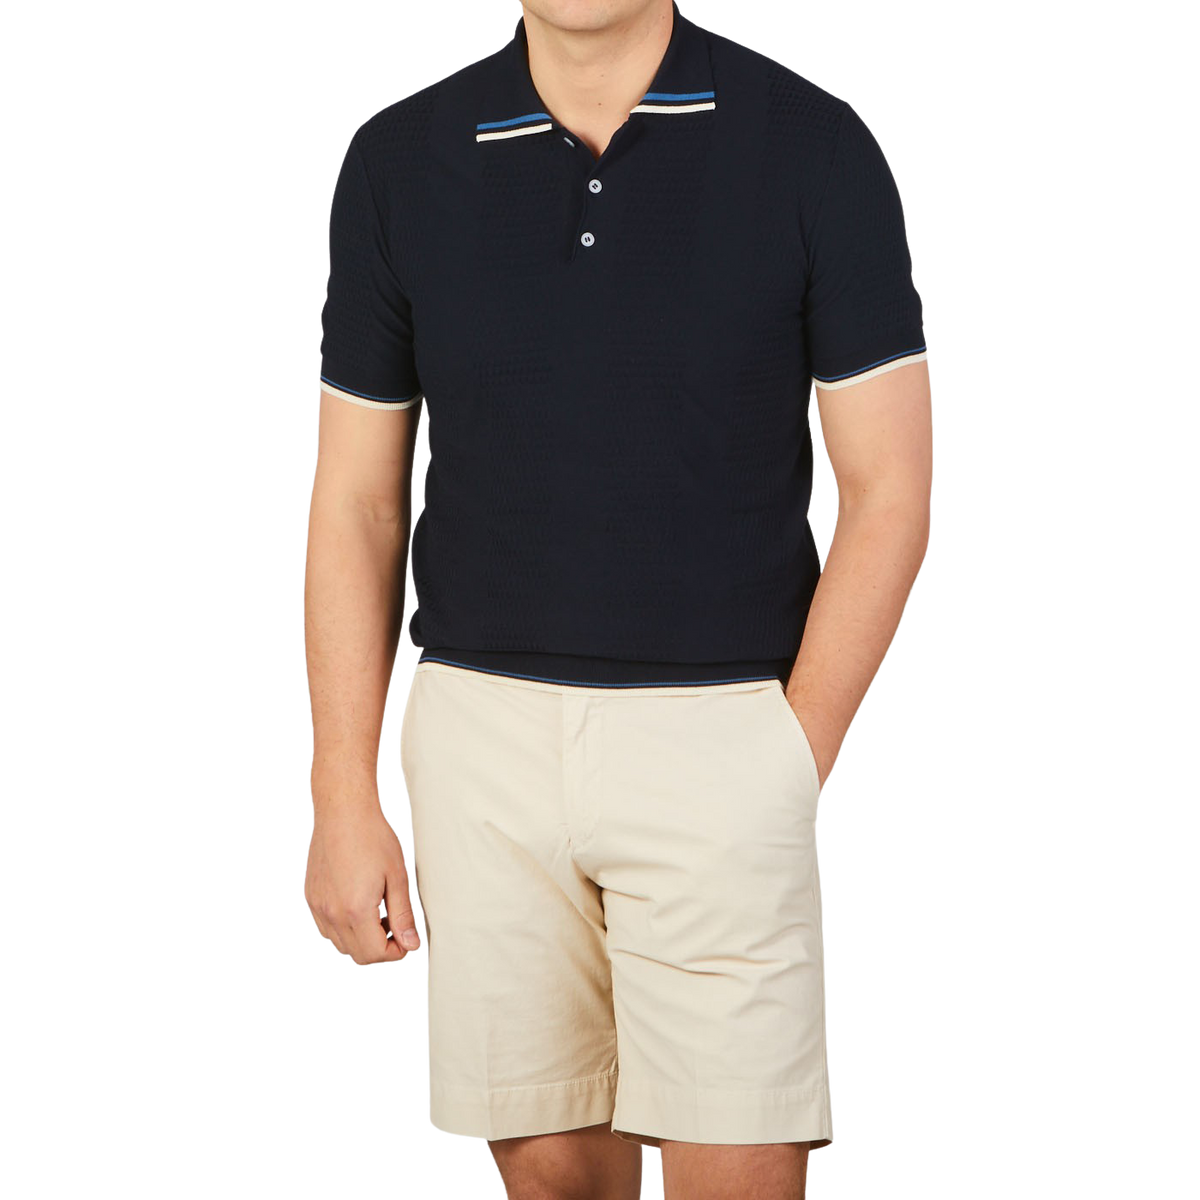 Altea Navy Blue Cotton Tipped Polo Shirt Front